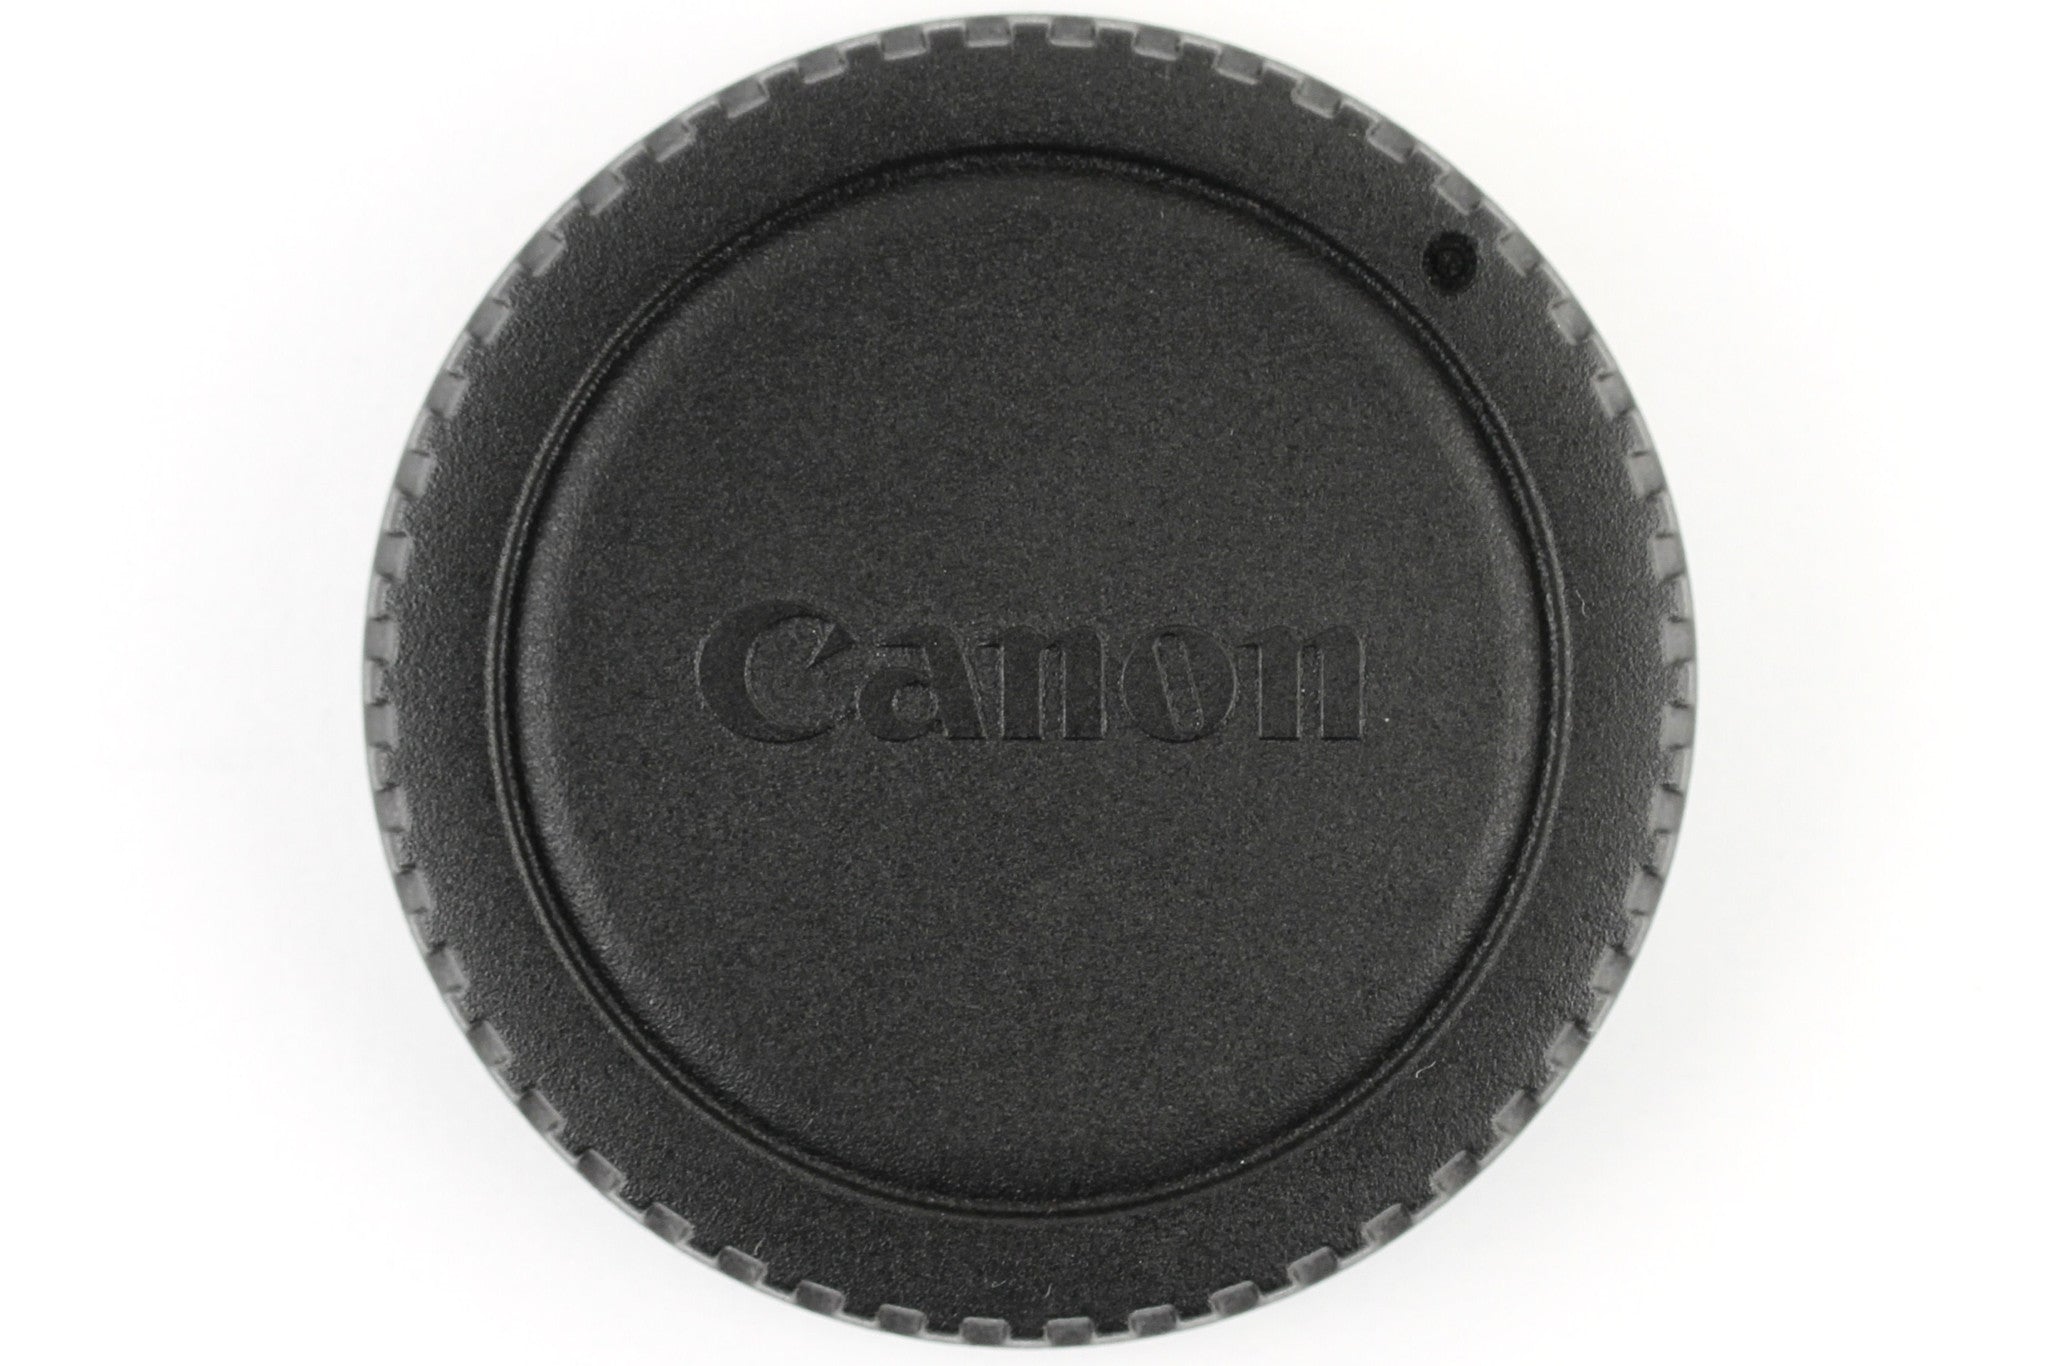 Canon Cover R-F-3 Body Cap, lenses lens caps, Canon - Pictureline 